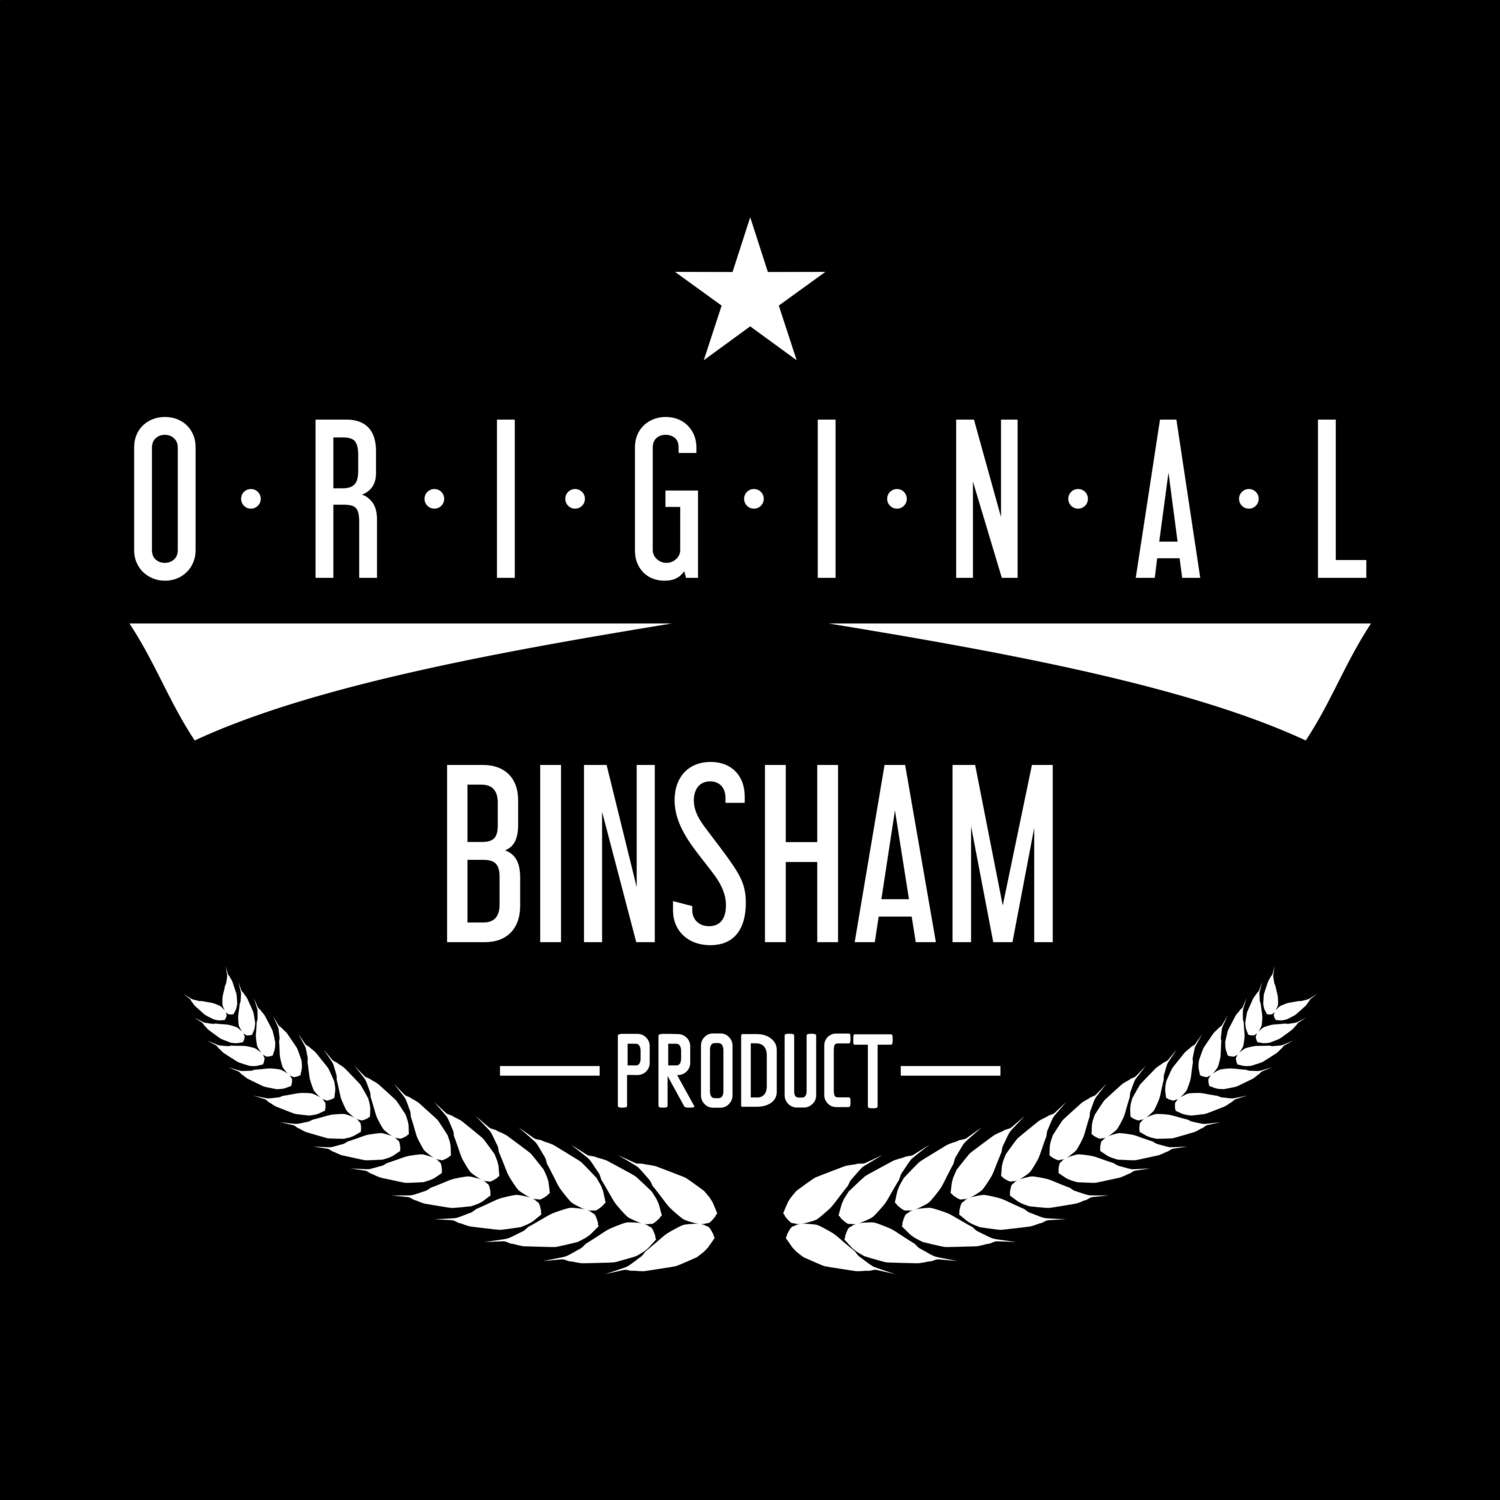 Binsham T-Shirt »Original Product«